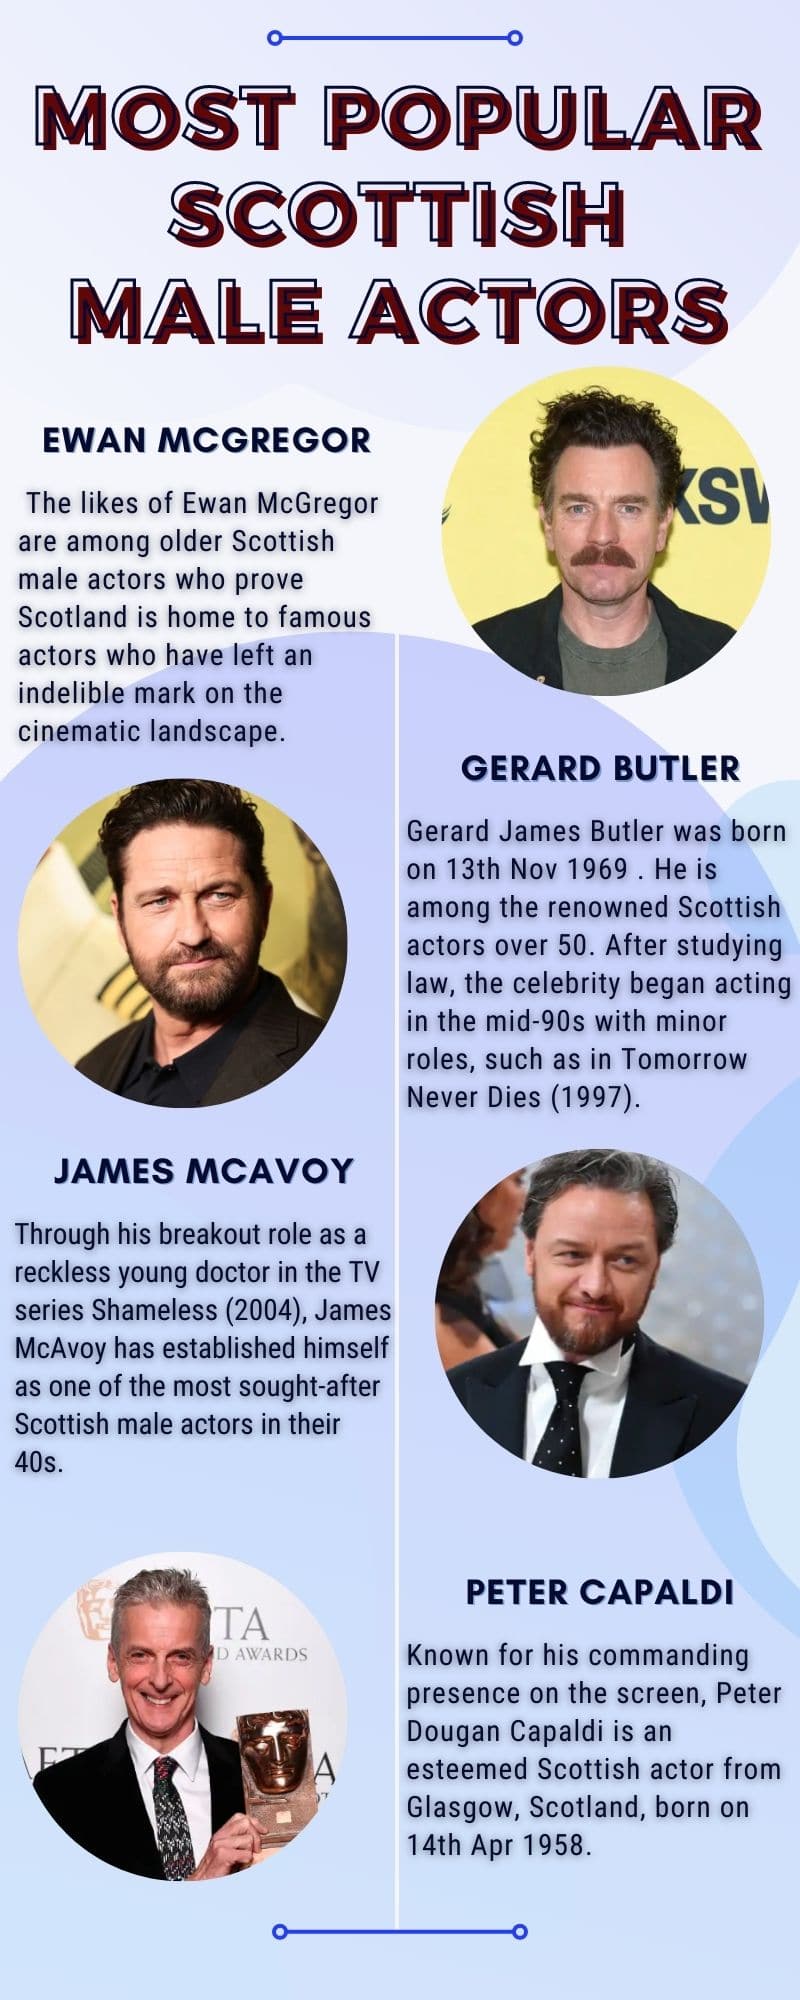 Most popular Scottish male actors